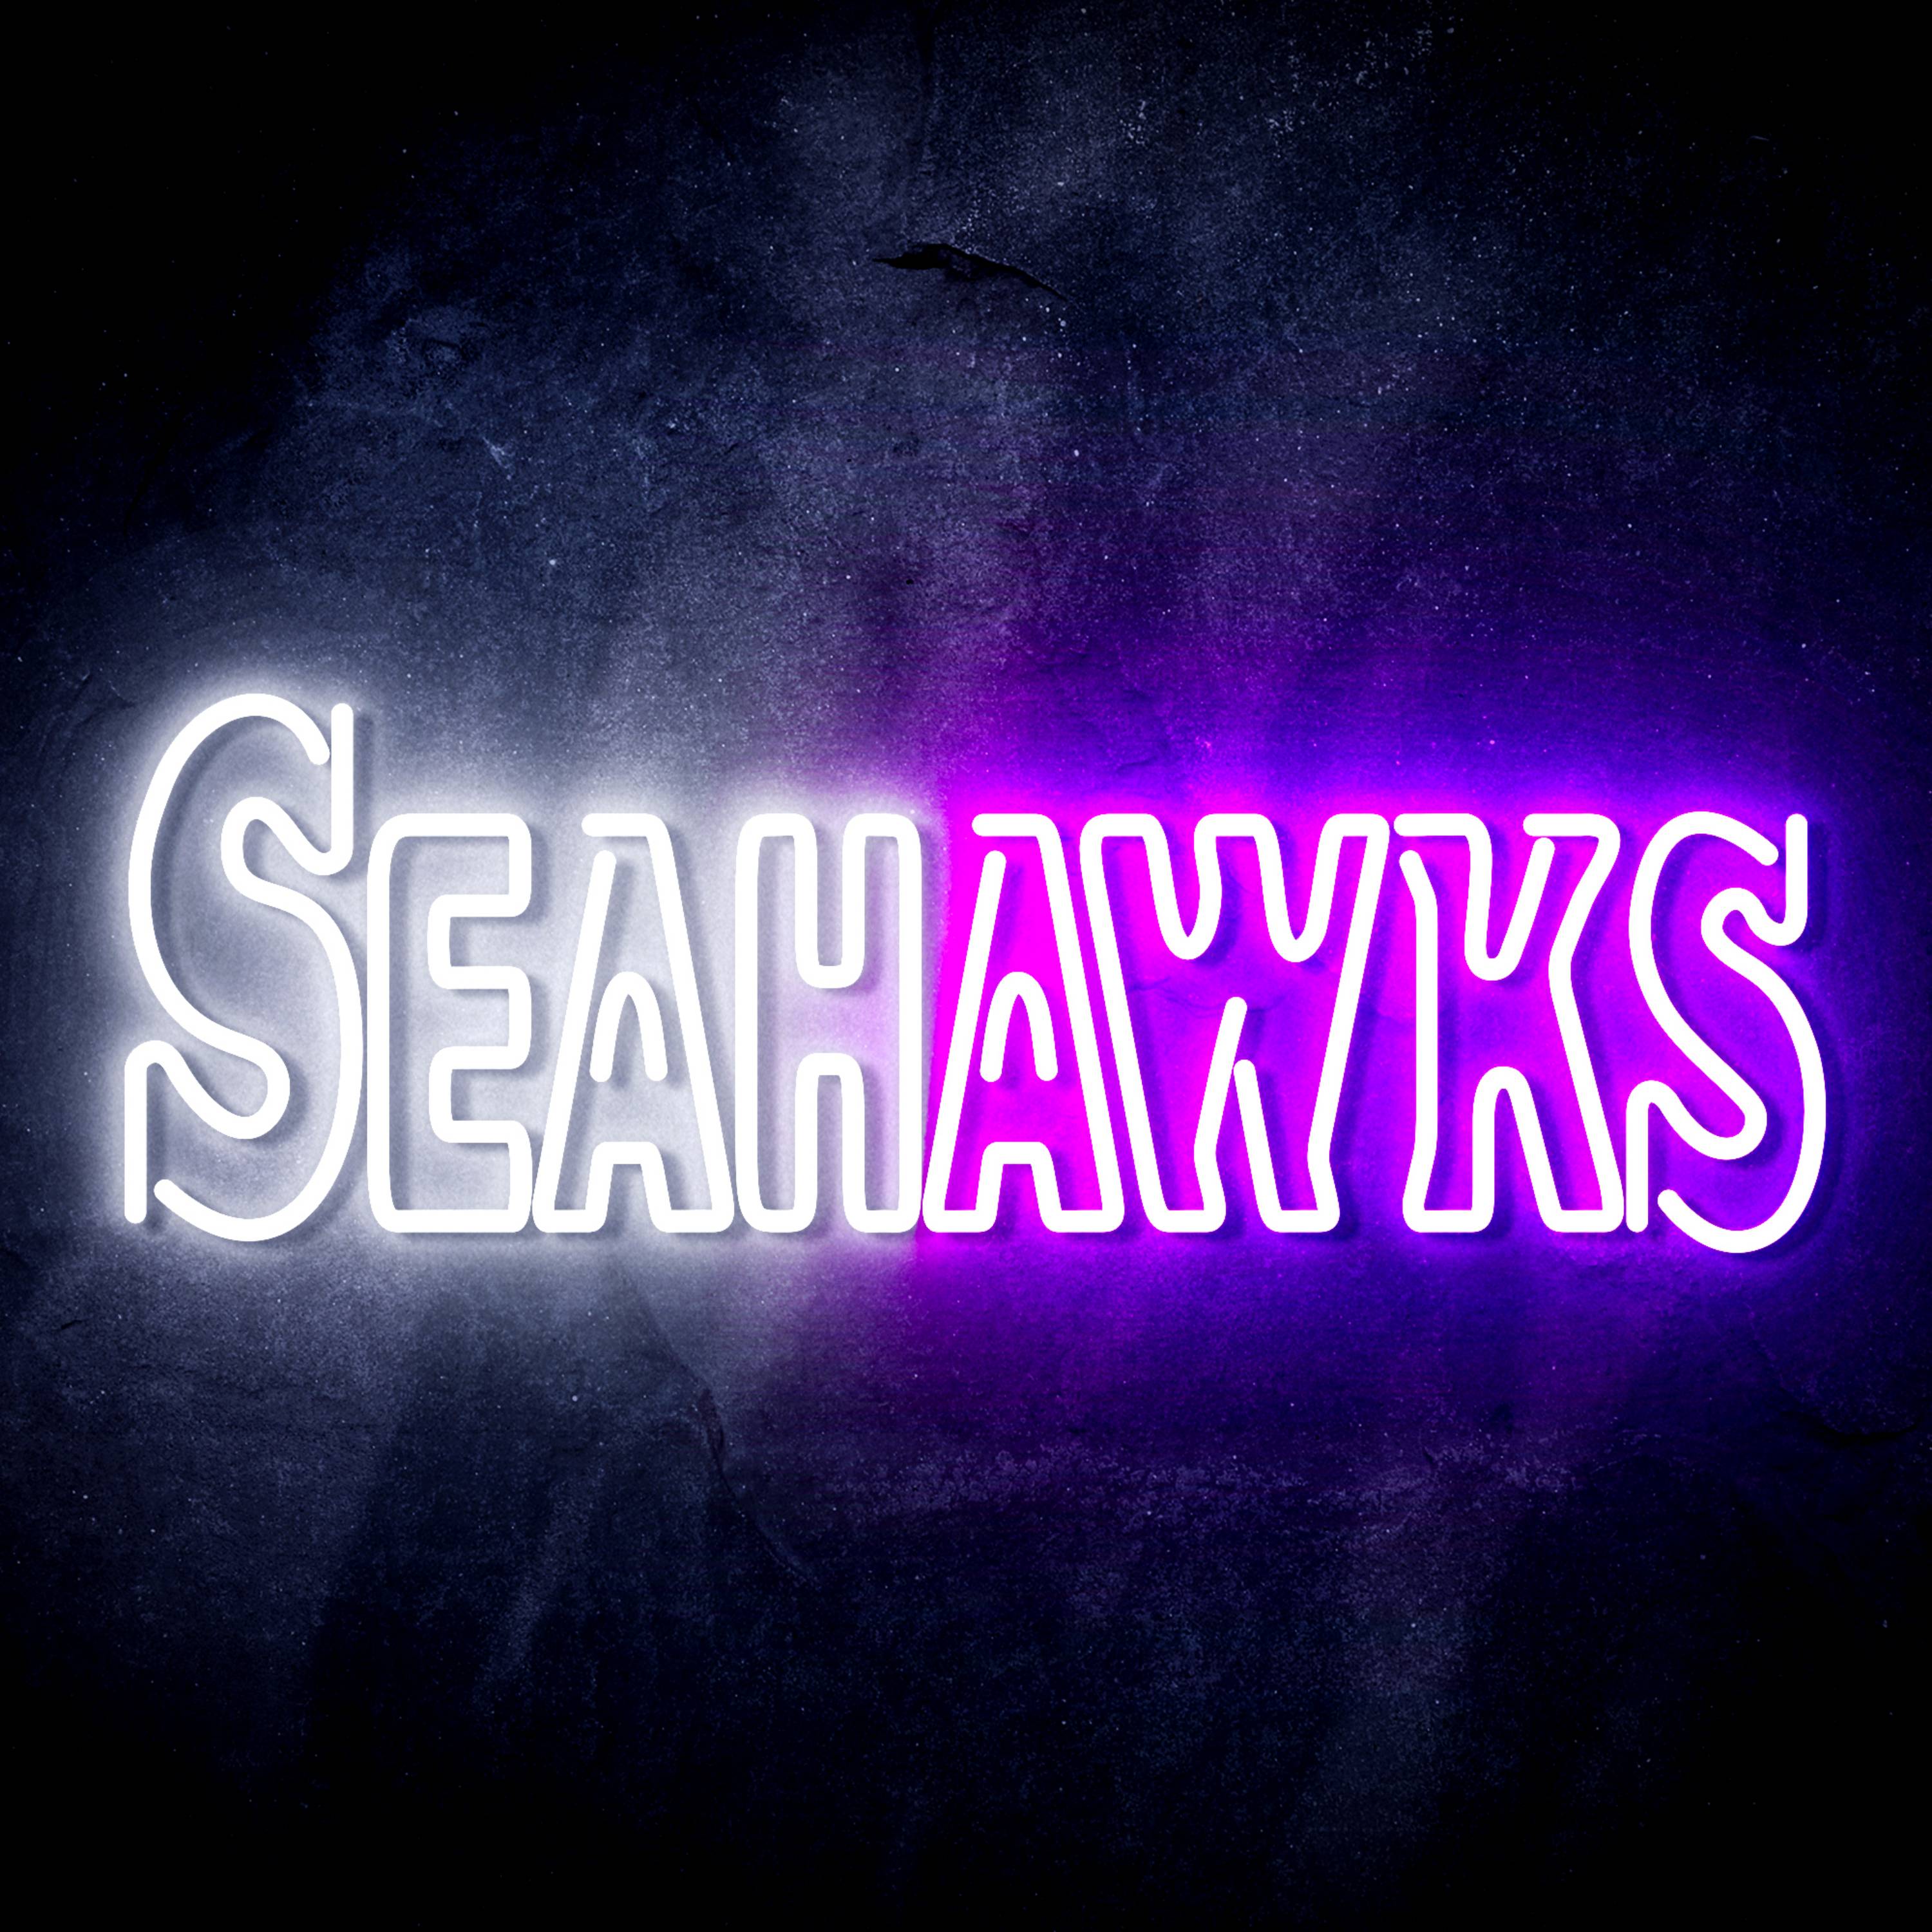 NFL SEAHAWKS LED Neon Sign